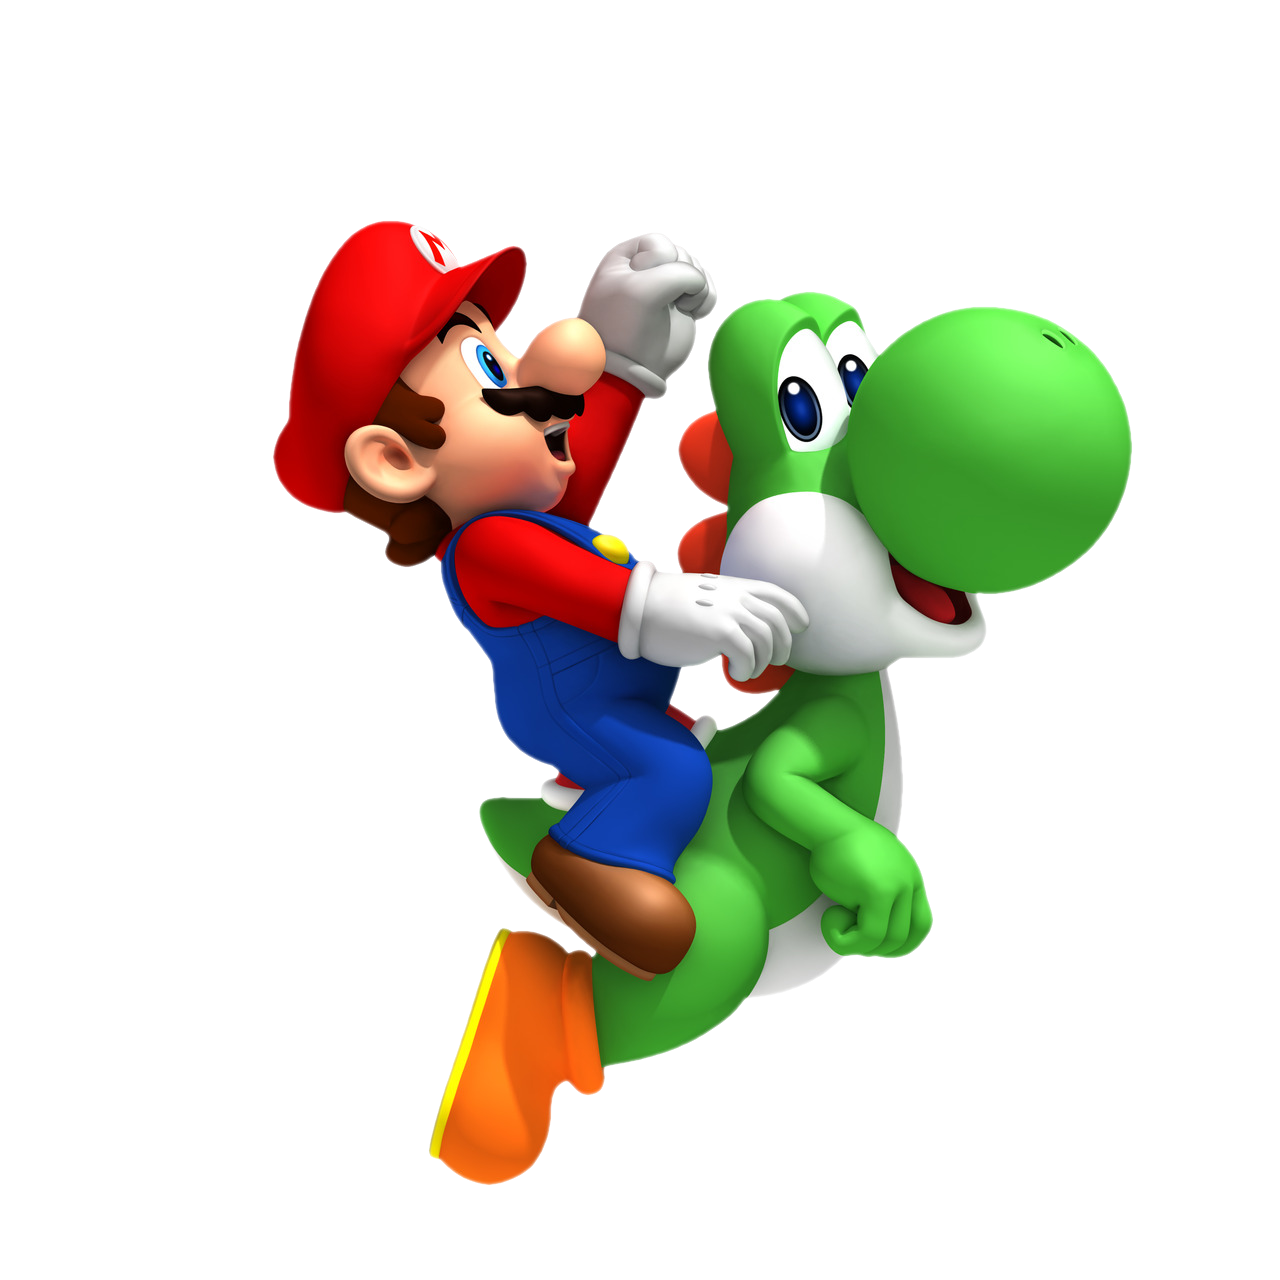 Download Mario Bros Image HQ PNG Image | FreePNGImg